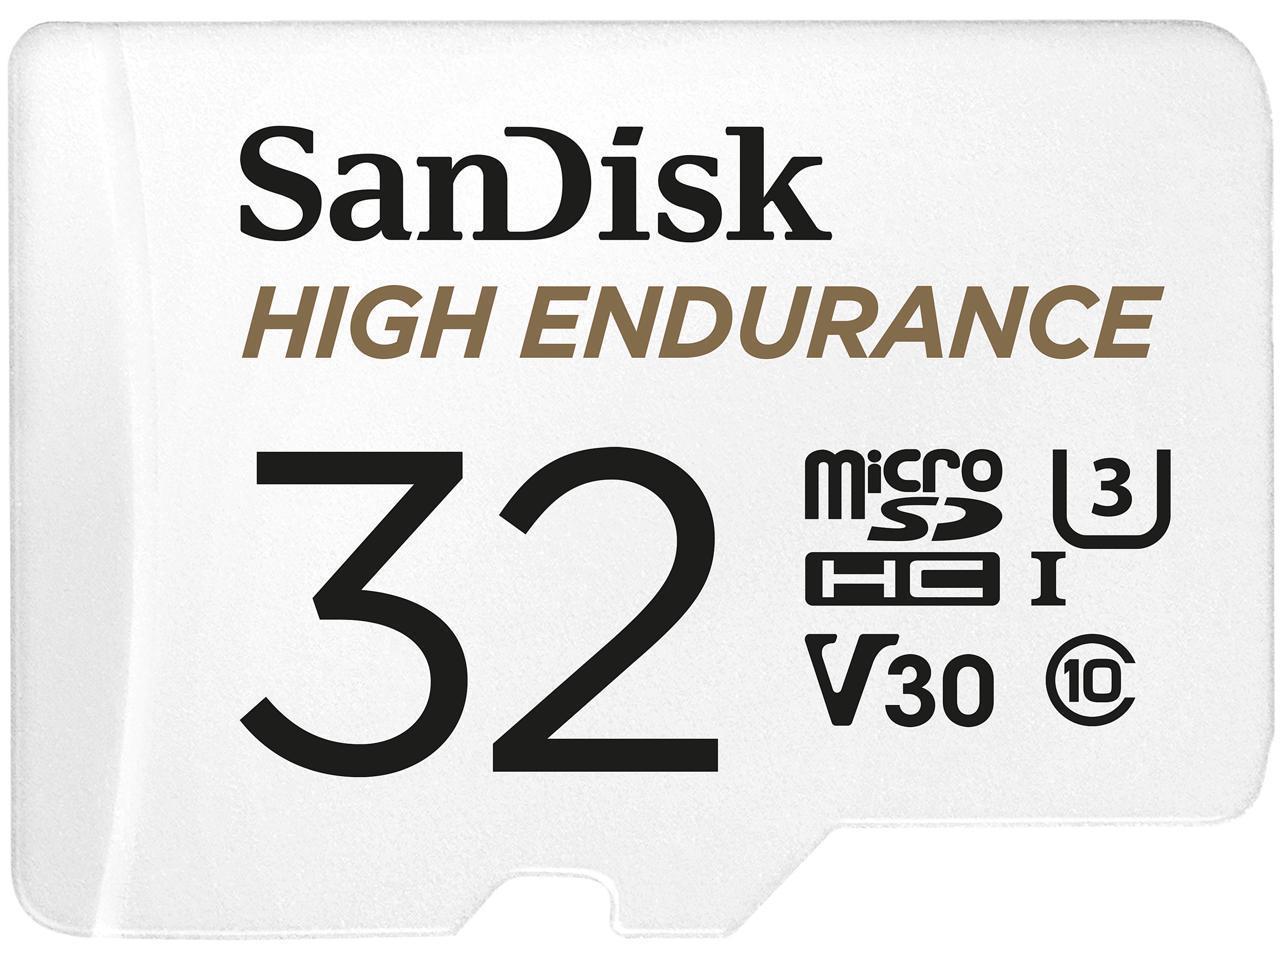 SanDisk High Endurance - 32G MicroSDHC Card